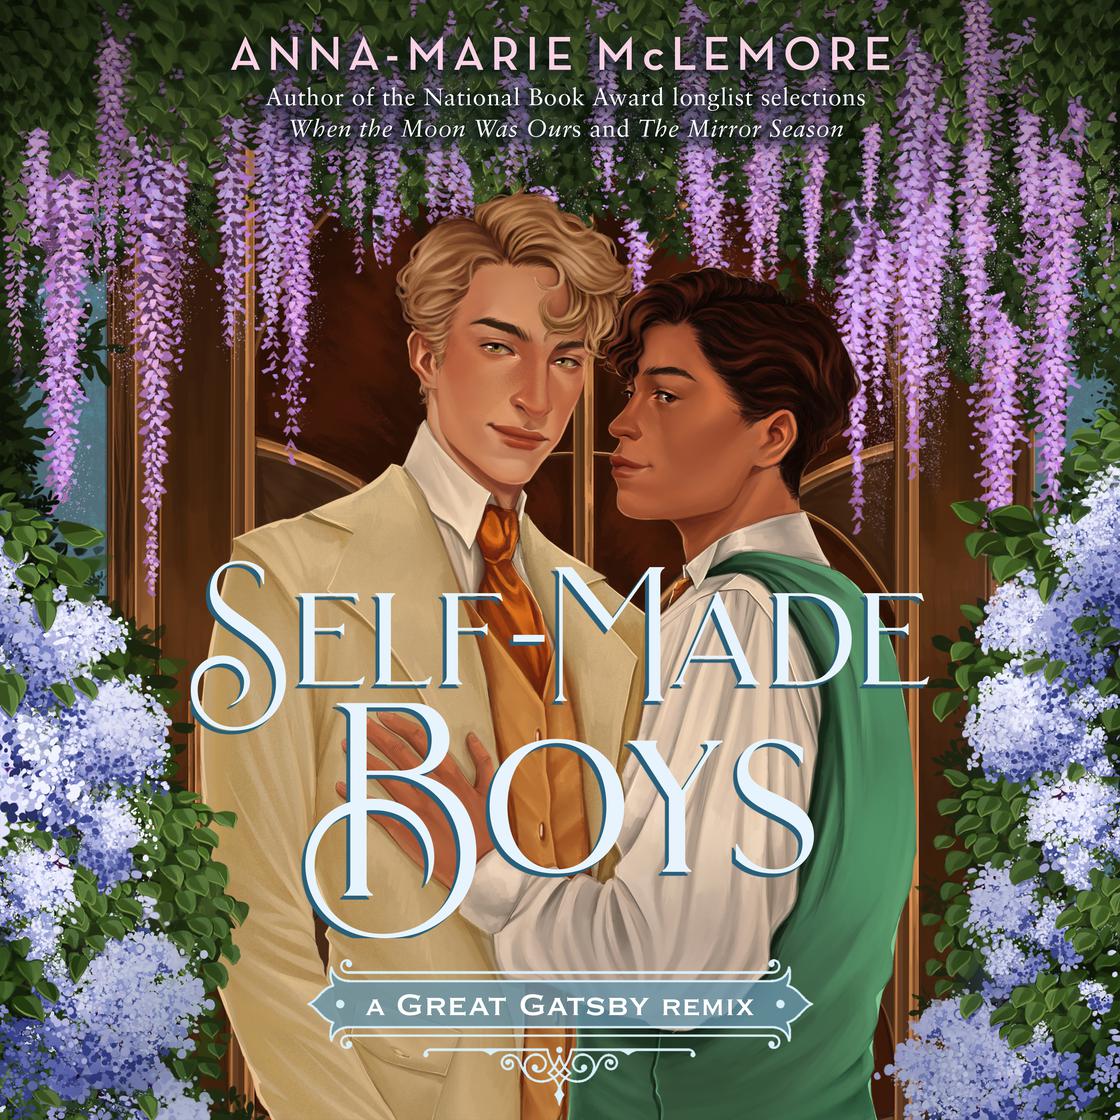 Anna-Marie McLemore: Self-Made Boys (AudiobookFormat, 2022, Macmillan Audio)